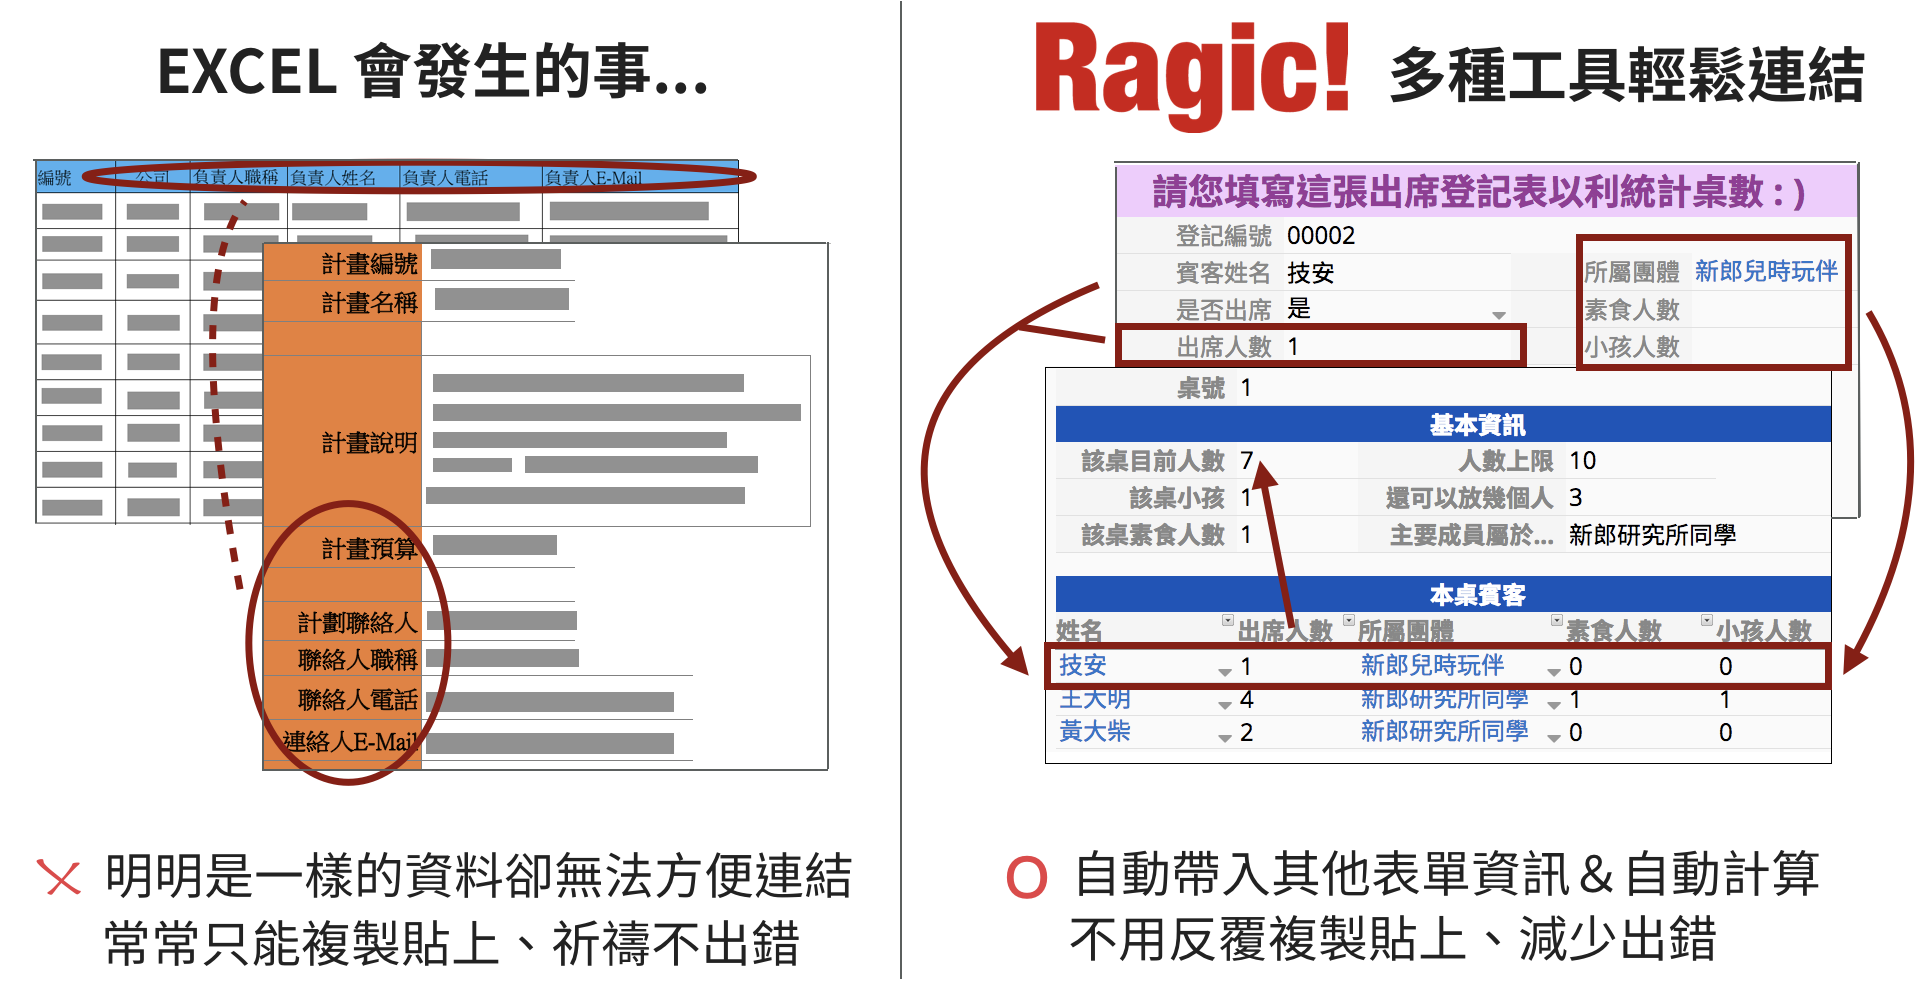 Excel 经常明明是一样的资料却无法方便连结，只能复制贴上祈祷不出错；在 Ragic 有多种工具轻松连结表单，自动带入其他表单资讯，自动计算，减少出错